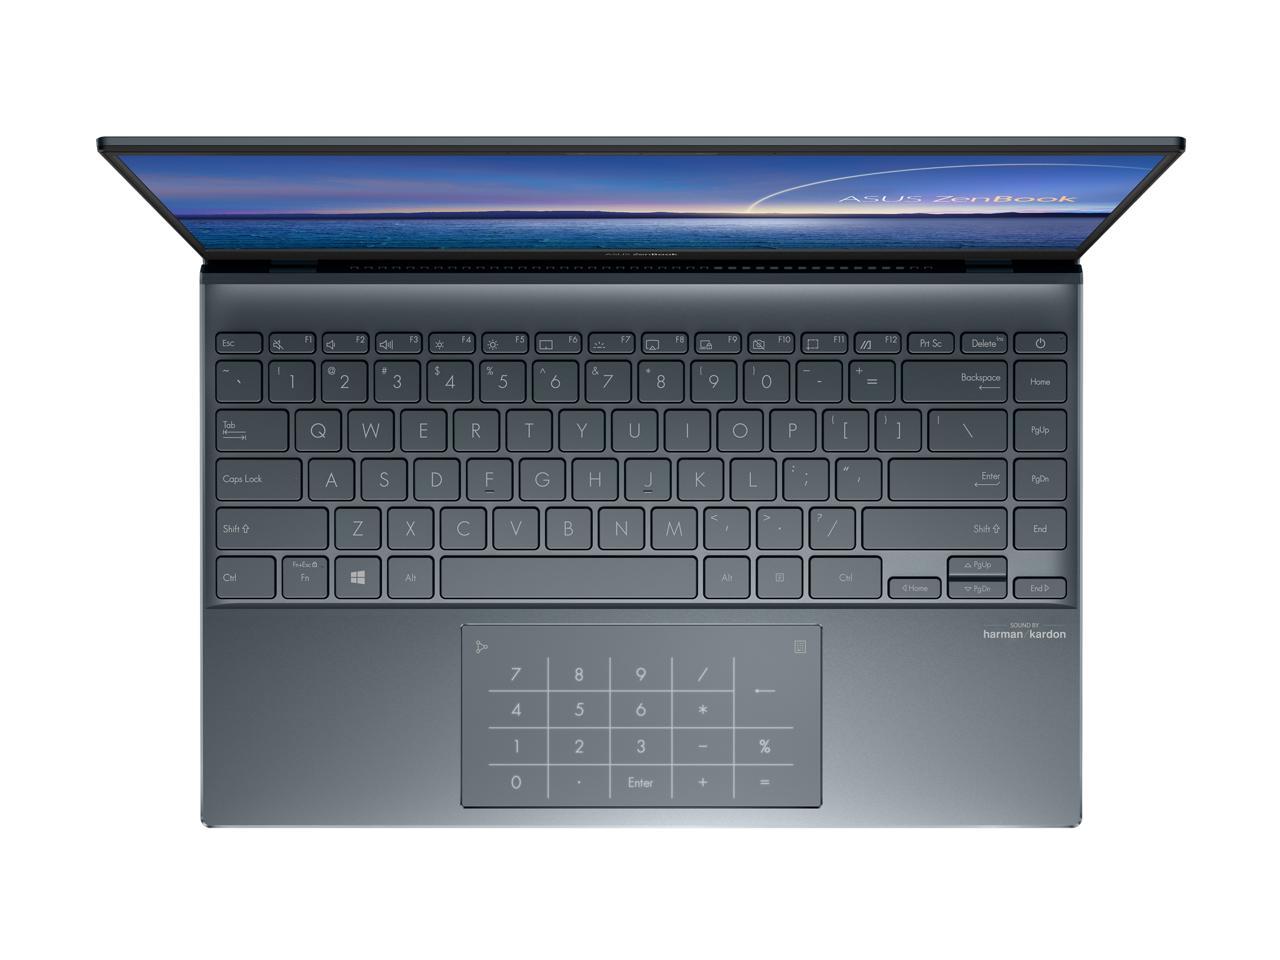 Asus Zenbook 14 Ultra Slim Laptop 14 Full Hd I7 1065g7